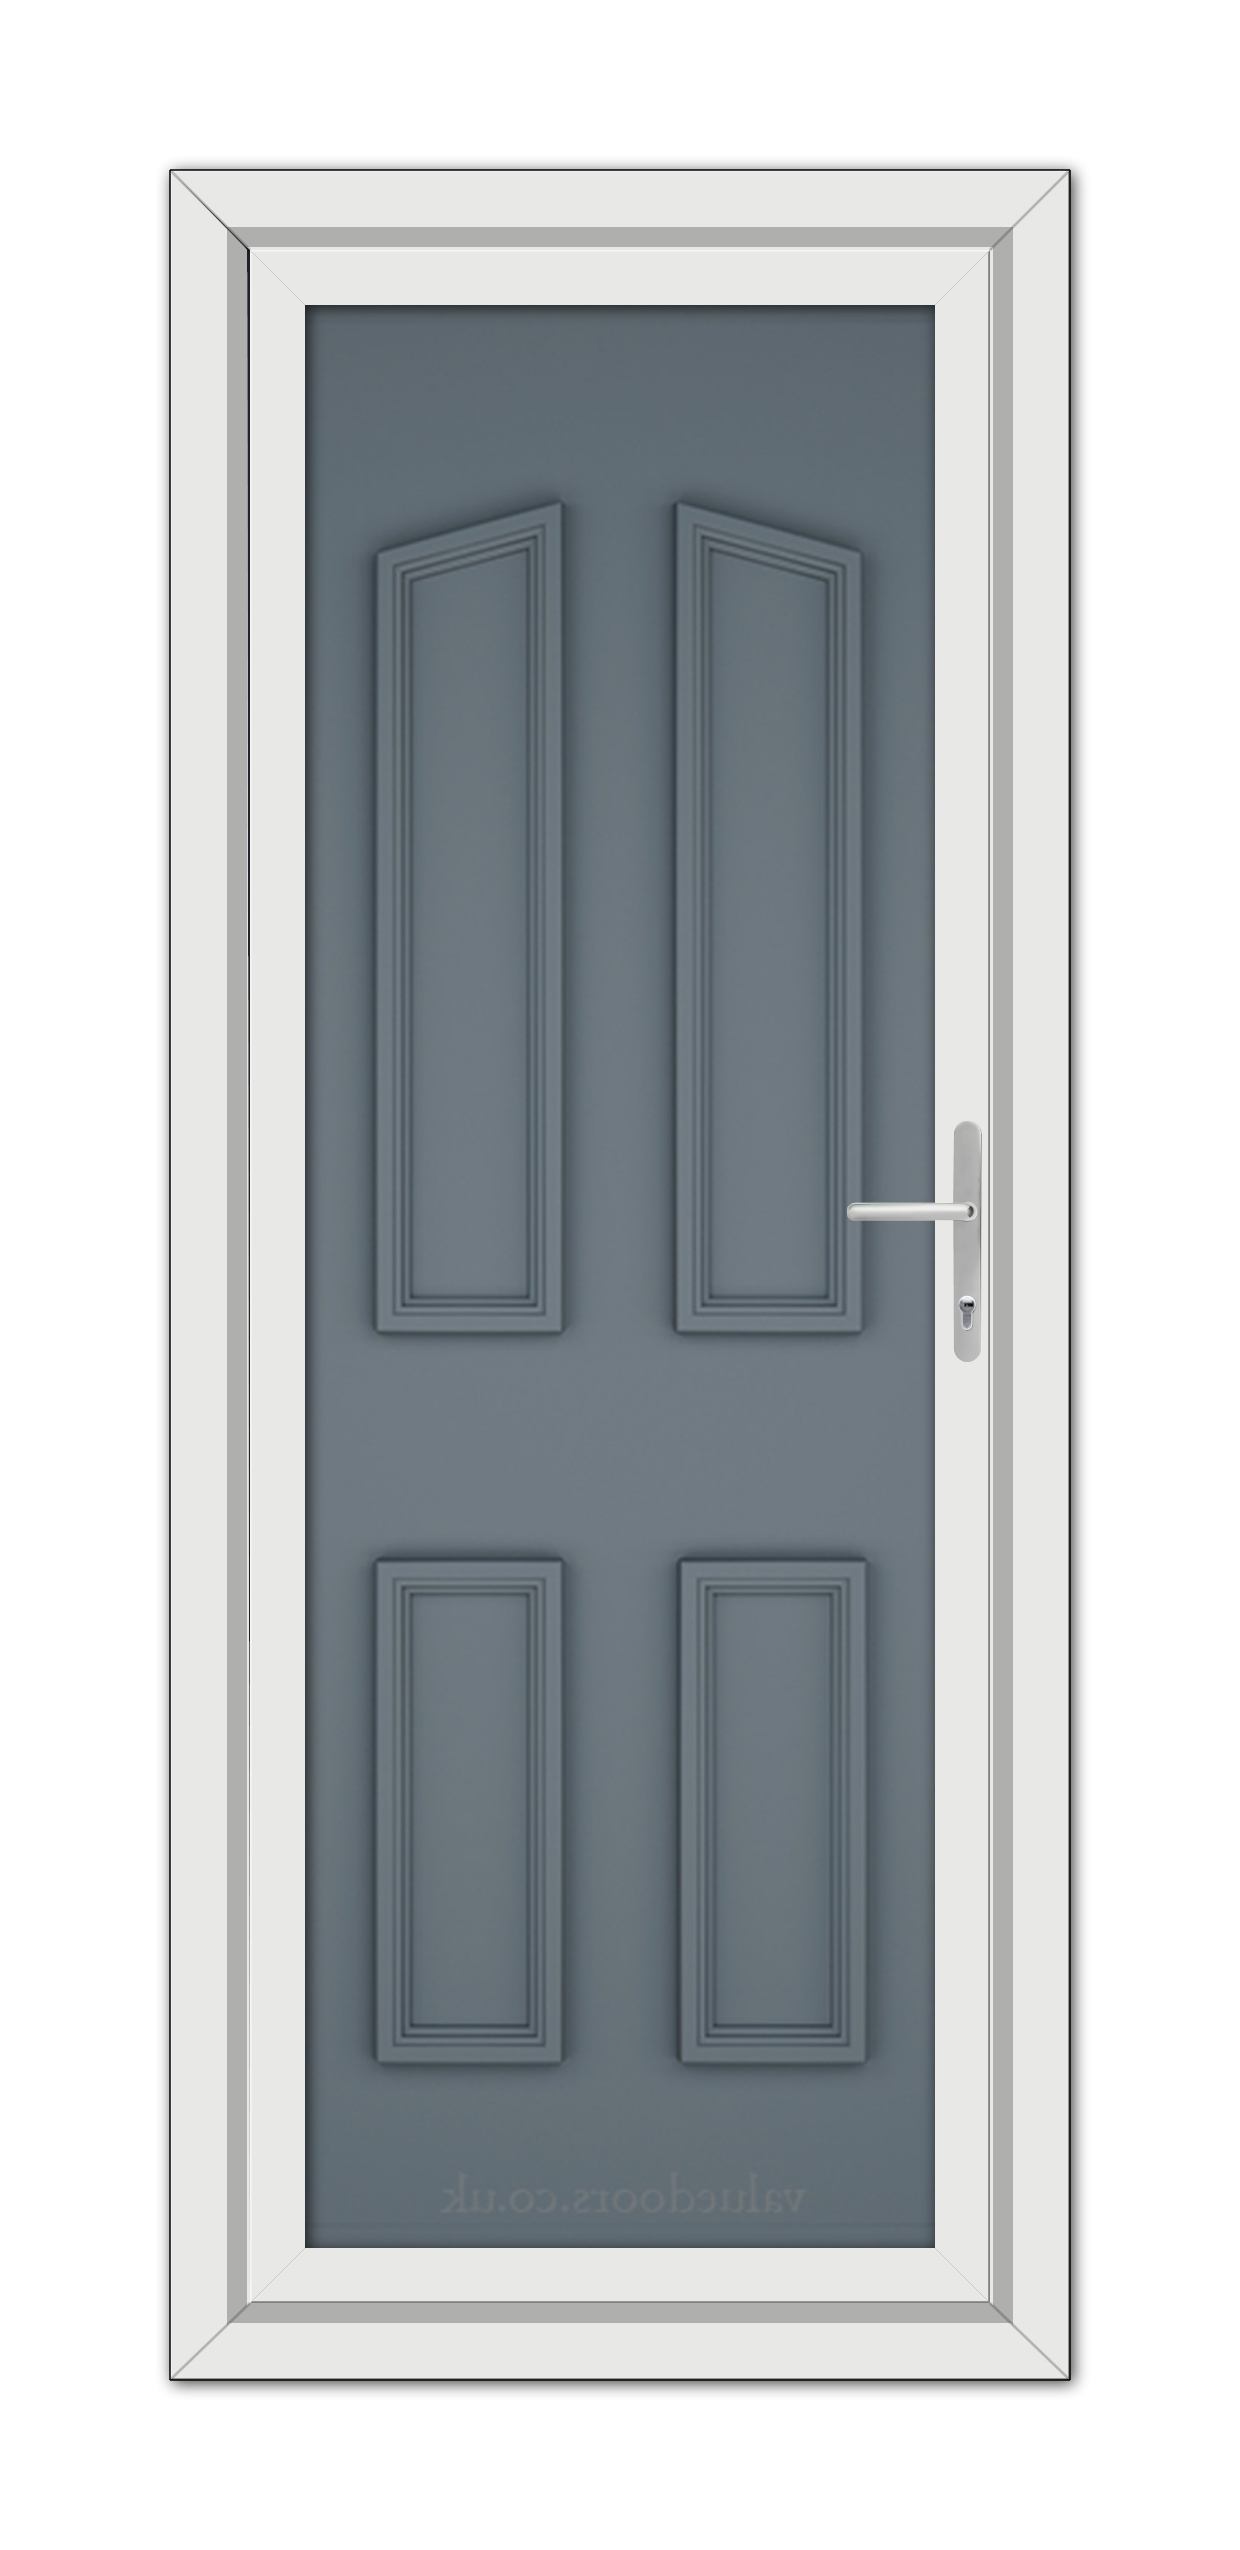 A Slate Grey Kensington Solid uPVC door with white trim.